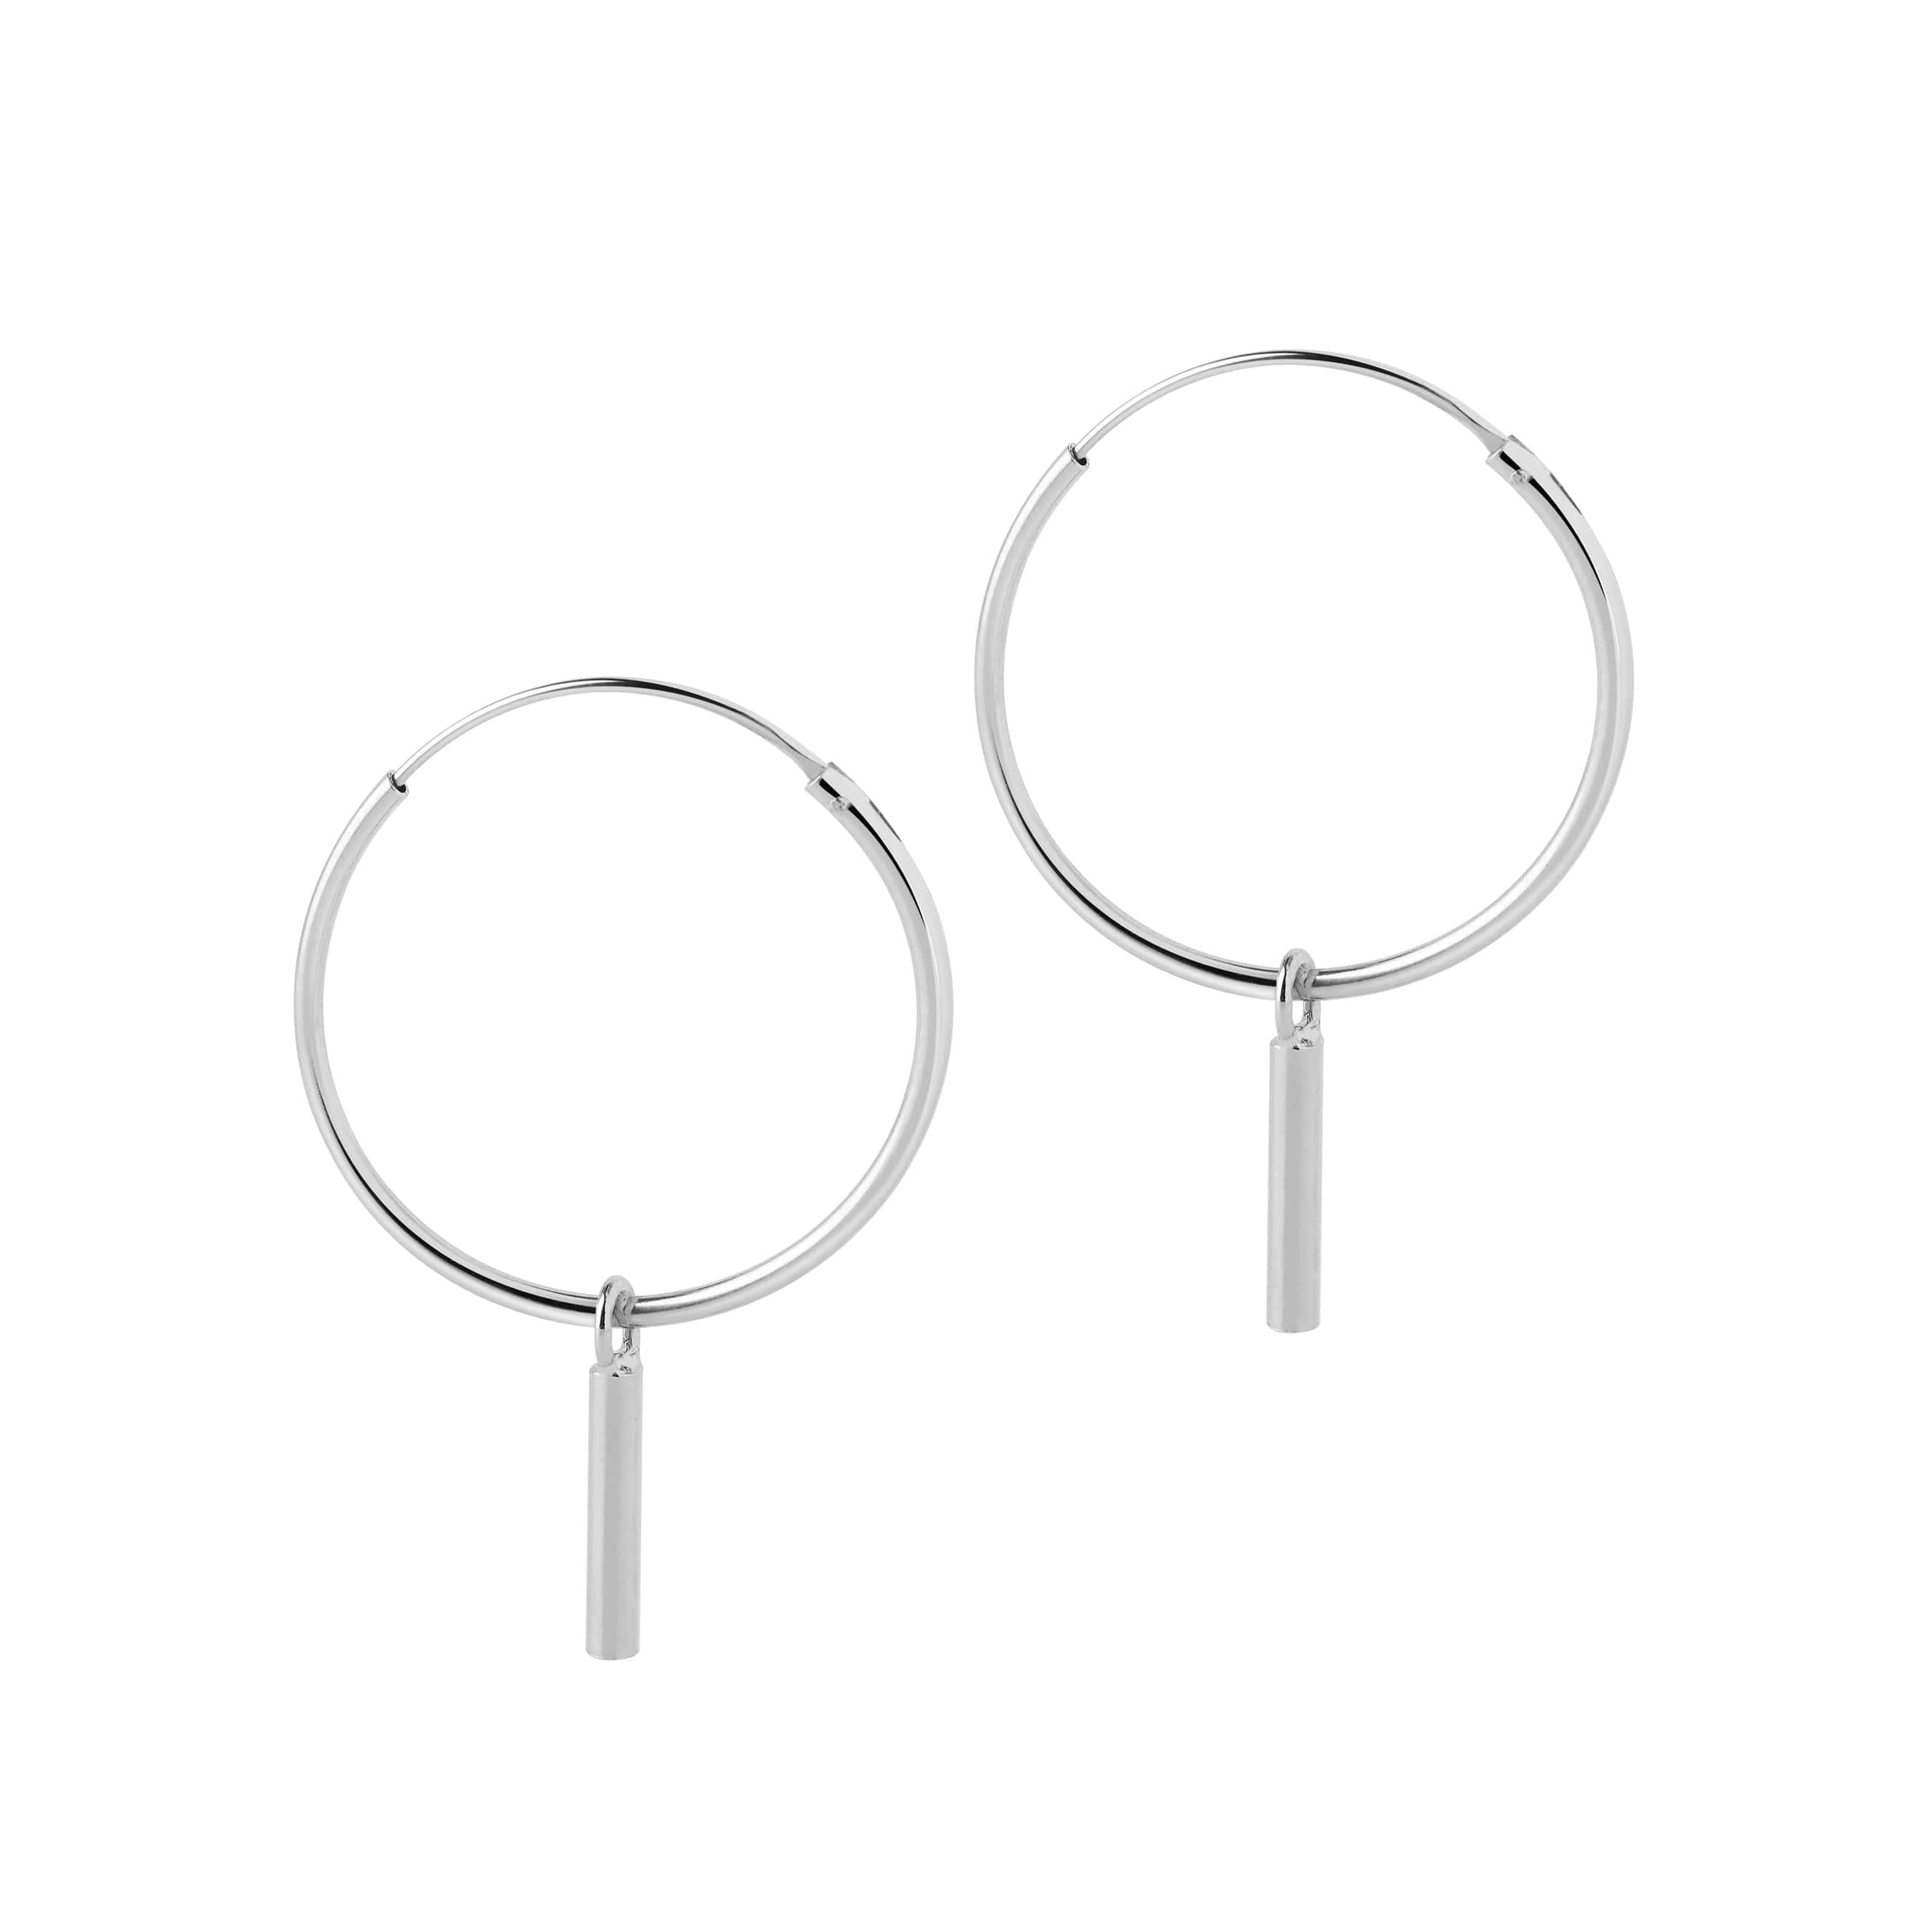 22mm silver hoop earrings with long rod